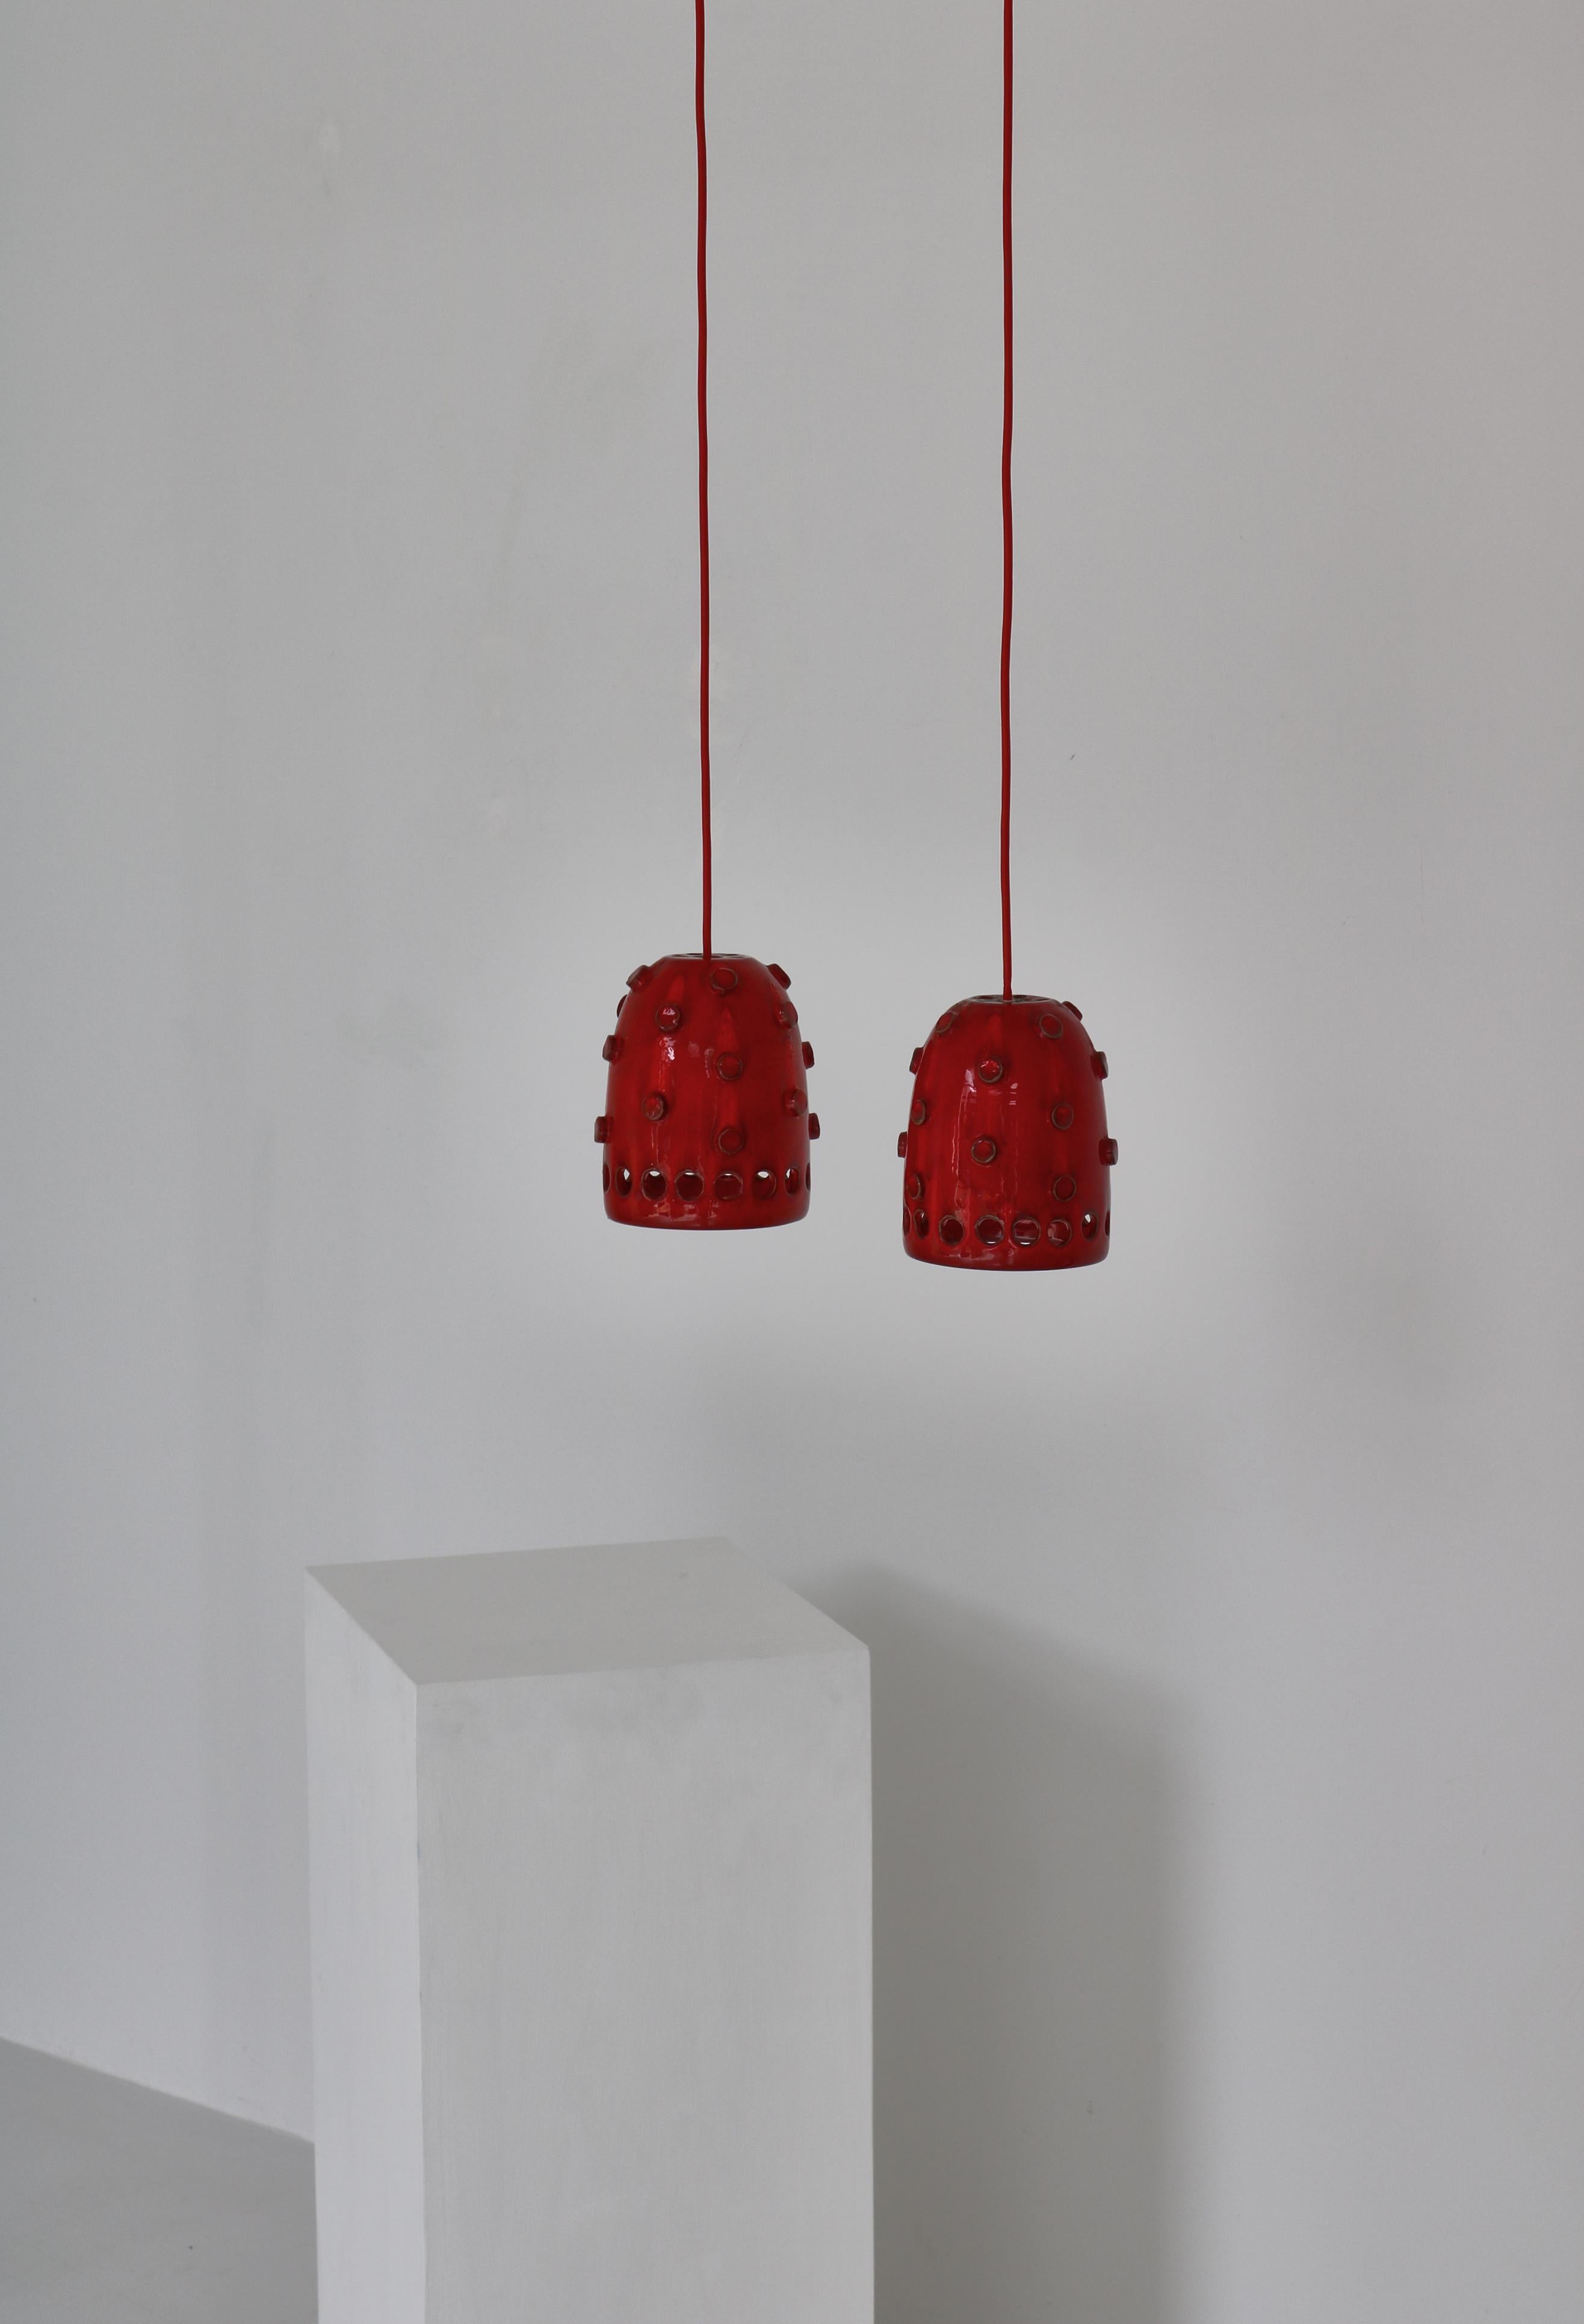 Danish Modern Red Ceramics Pendants by Jette Hellerøe at Axella Studio, 1970s For Sale 8